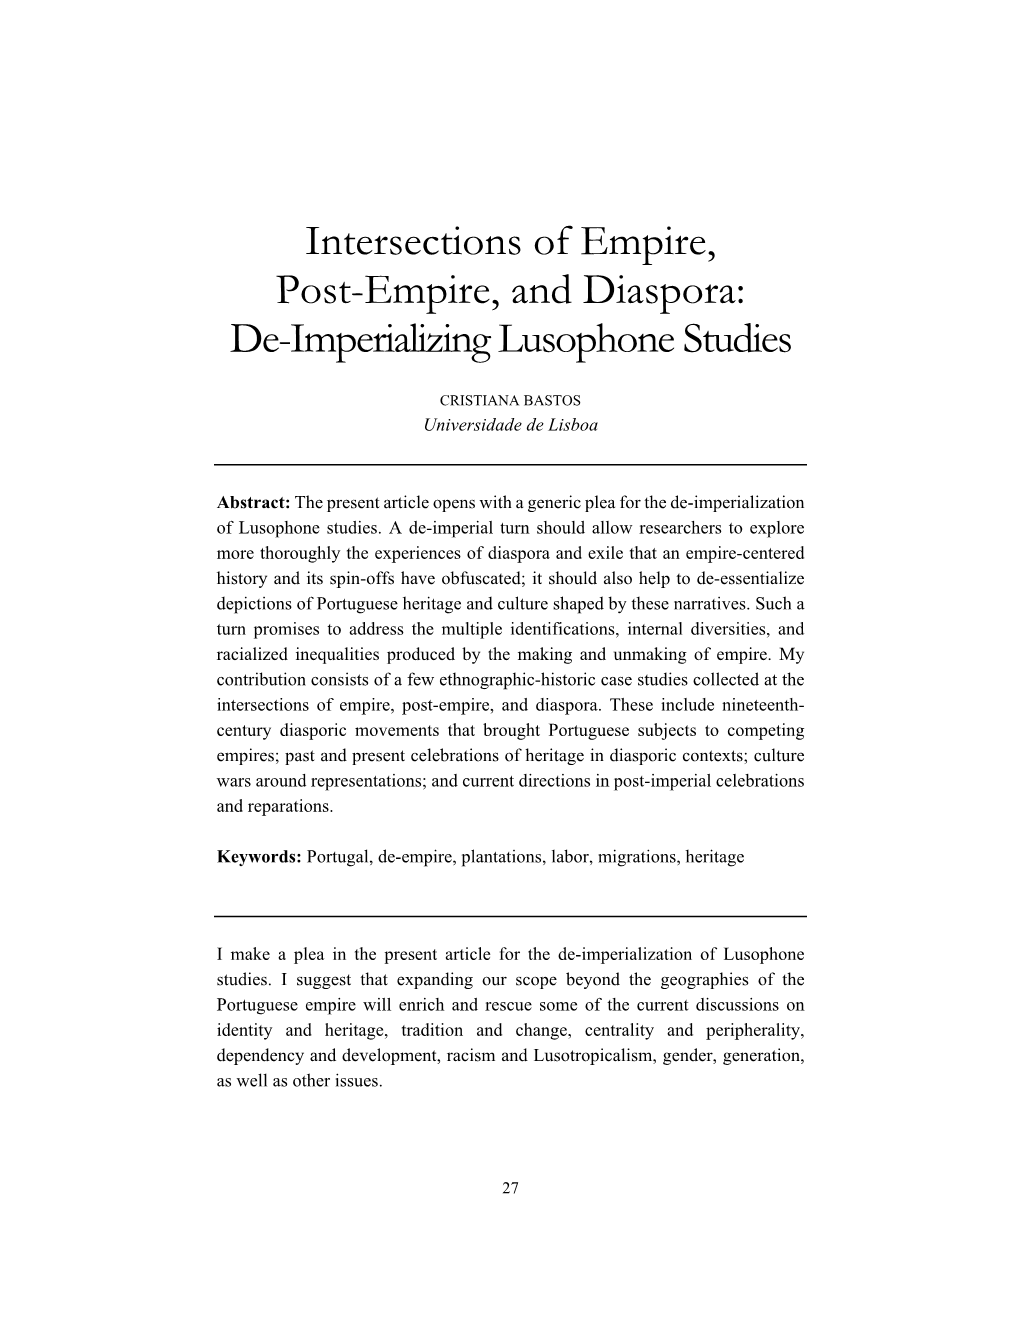 Intersections of Empire, Post-Empire, and Diaspora: De-Imperializing Lusophone Studies